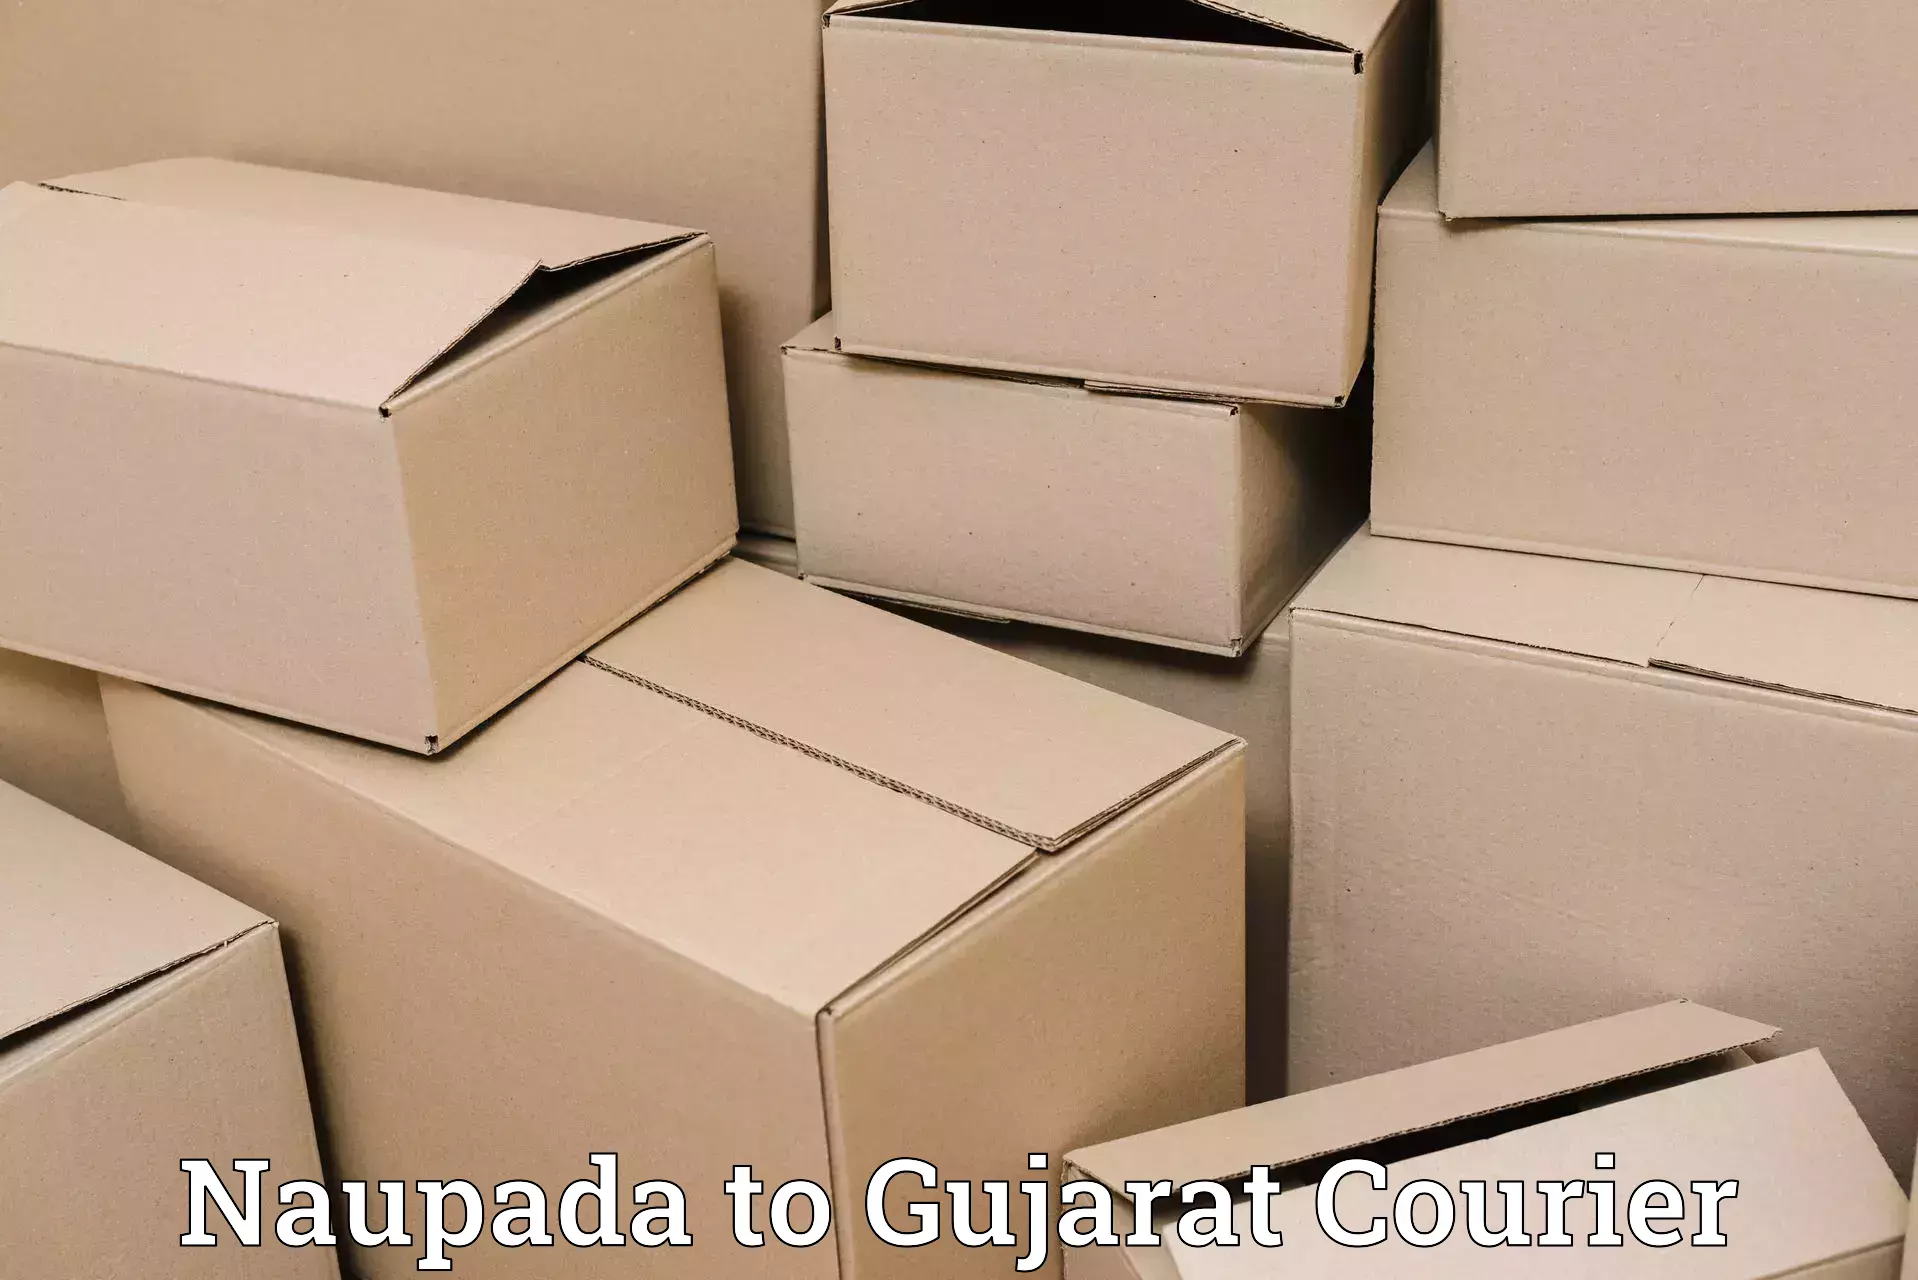 Express logistics providers Naupada to Ahmedabad